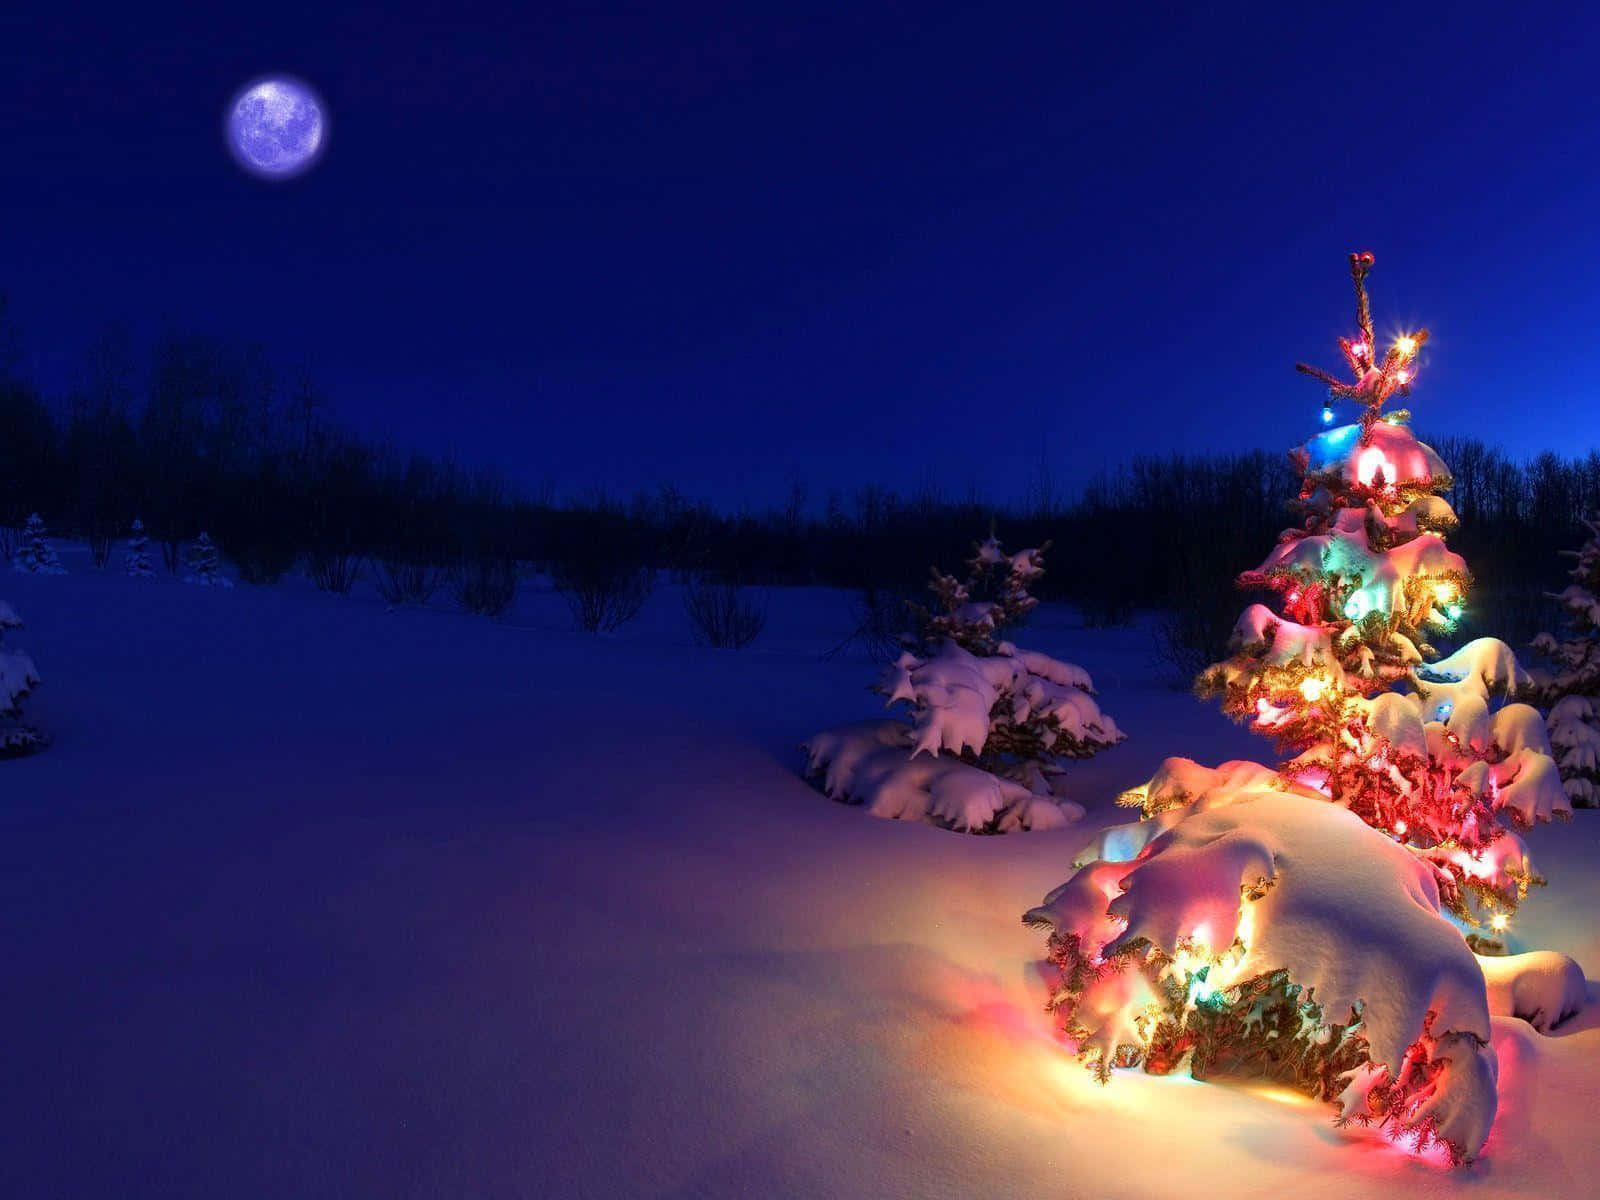 “A Scene Of Snowy Winter Wonderland On Christmas”